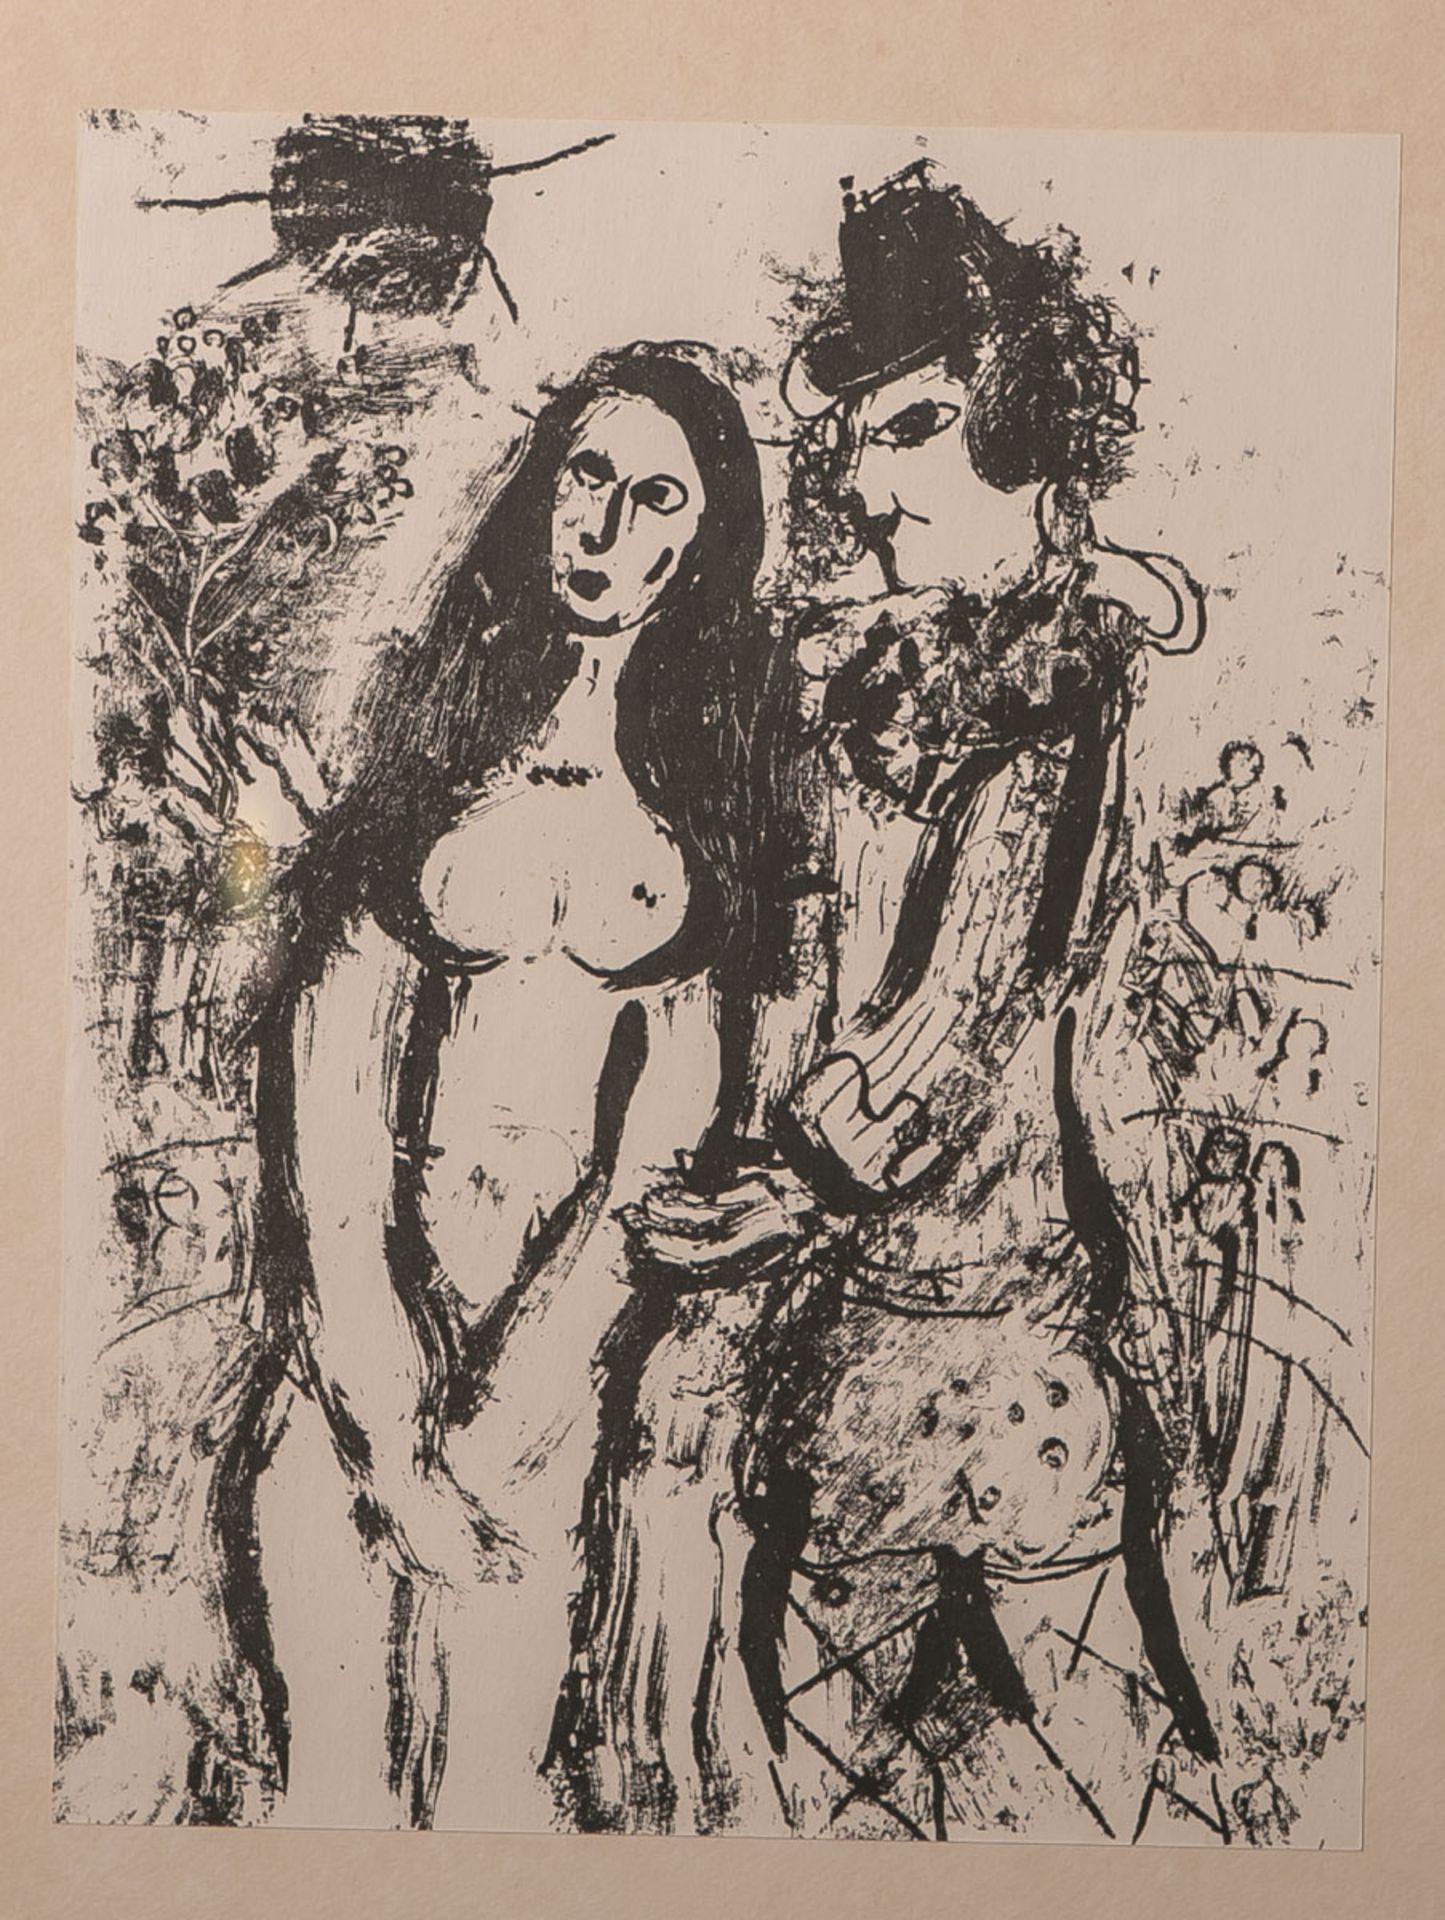 Chagall, Marc (1887 - 1985), "Der